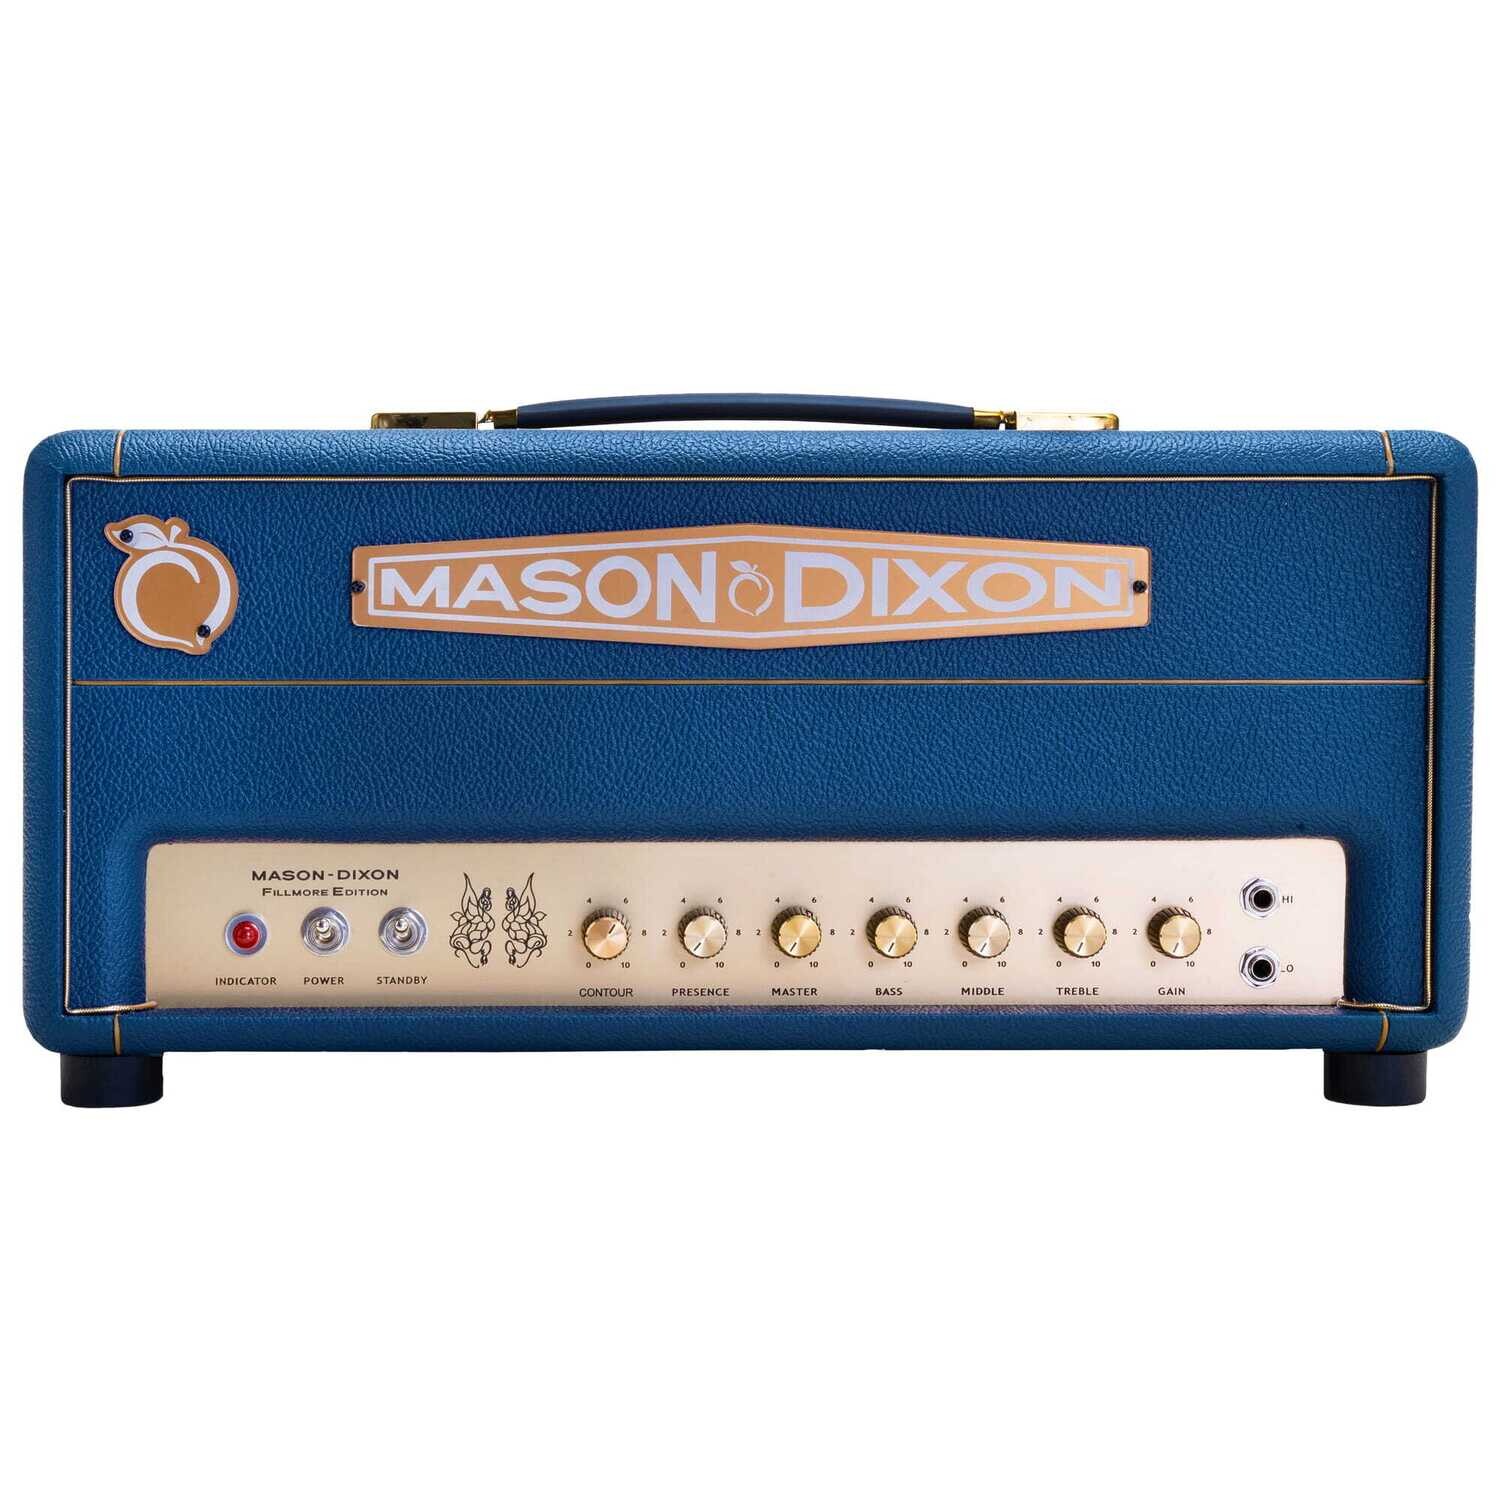 MASON-DIXON Fillmore East 45 Watt - Dickey Head